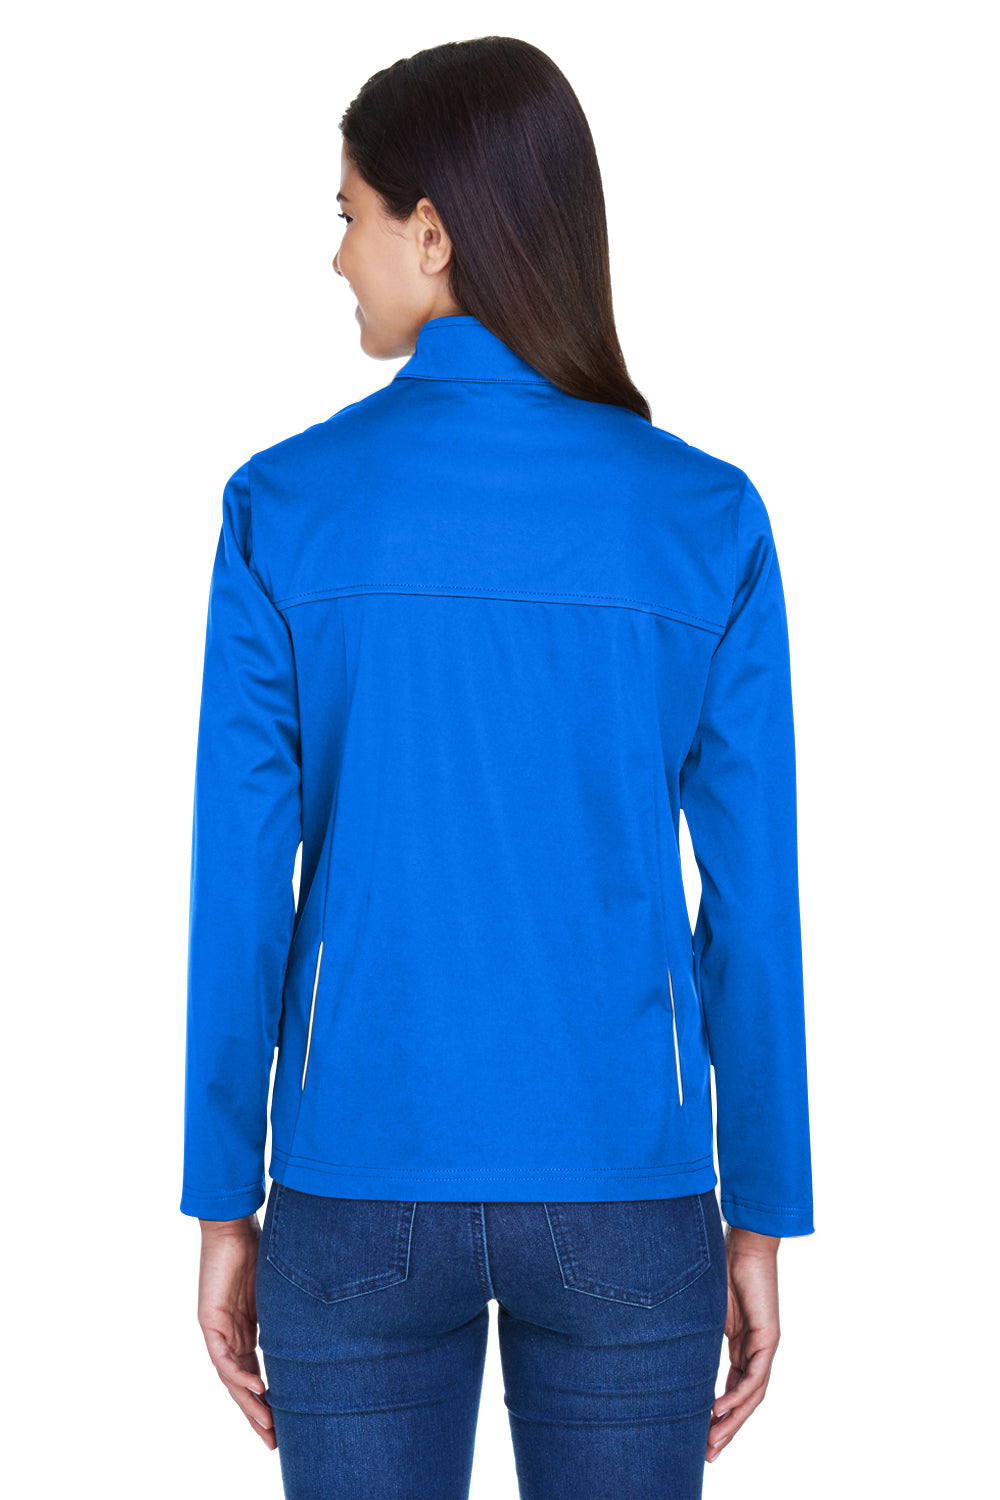 Core 365 CE708W Womens Techno Lite Water Resistant Full Zip Jacket Royal Blue Back